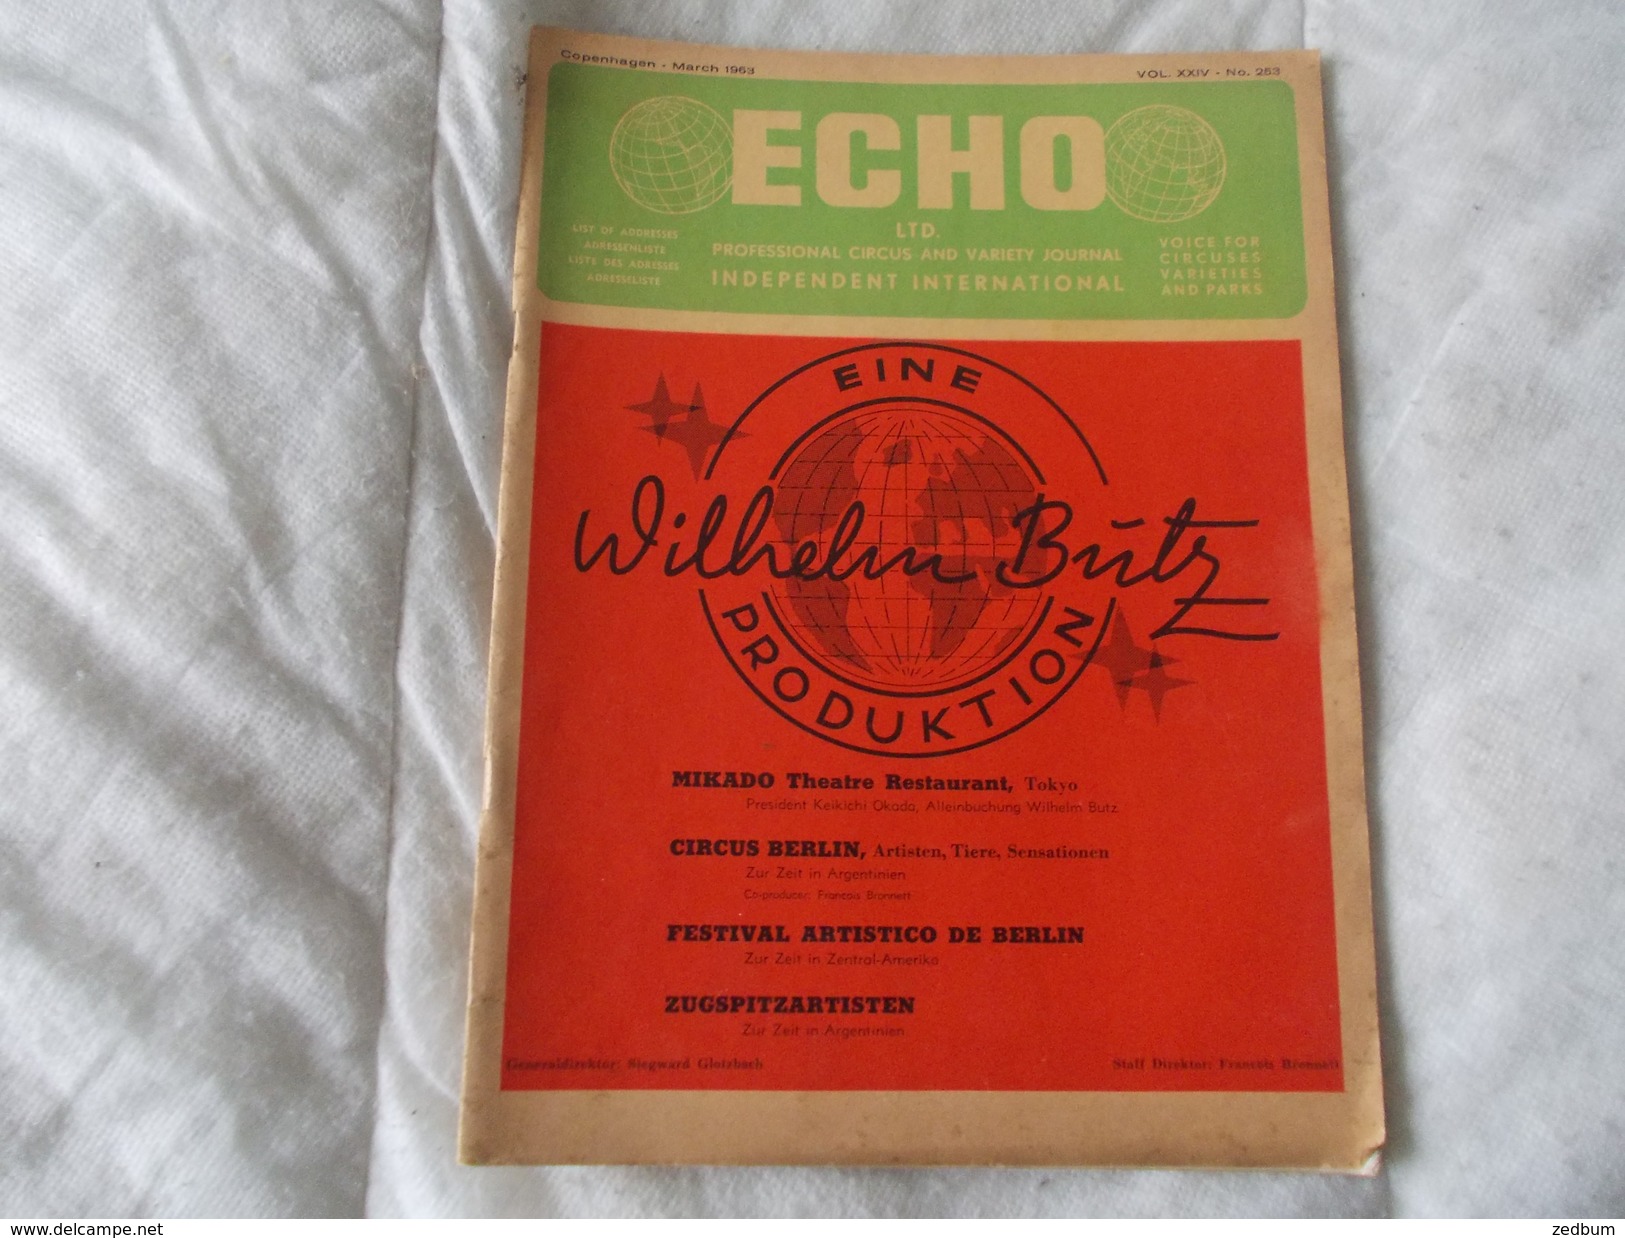 ECHO LTD Professional Circus And Variety Journal Independent International N° 253 March 1963 - Unterhaltung